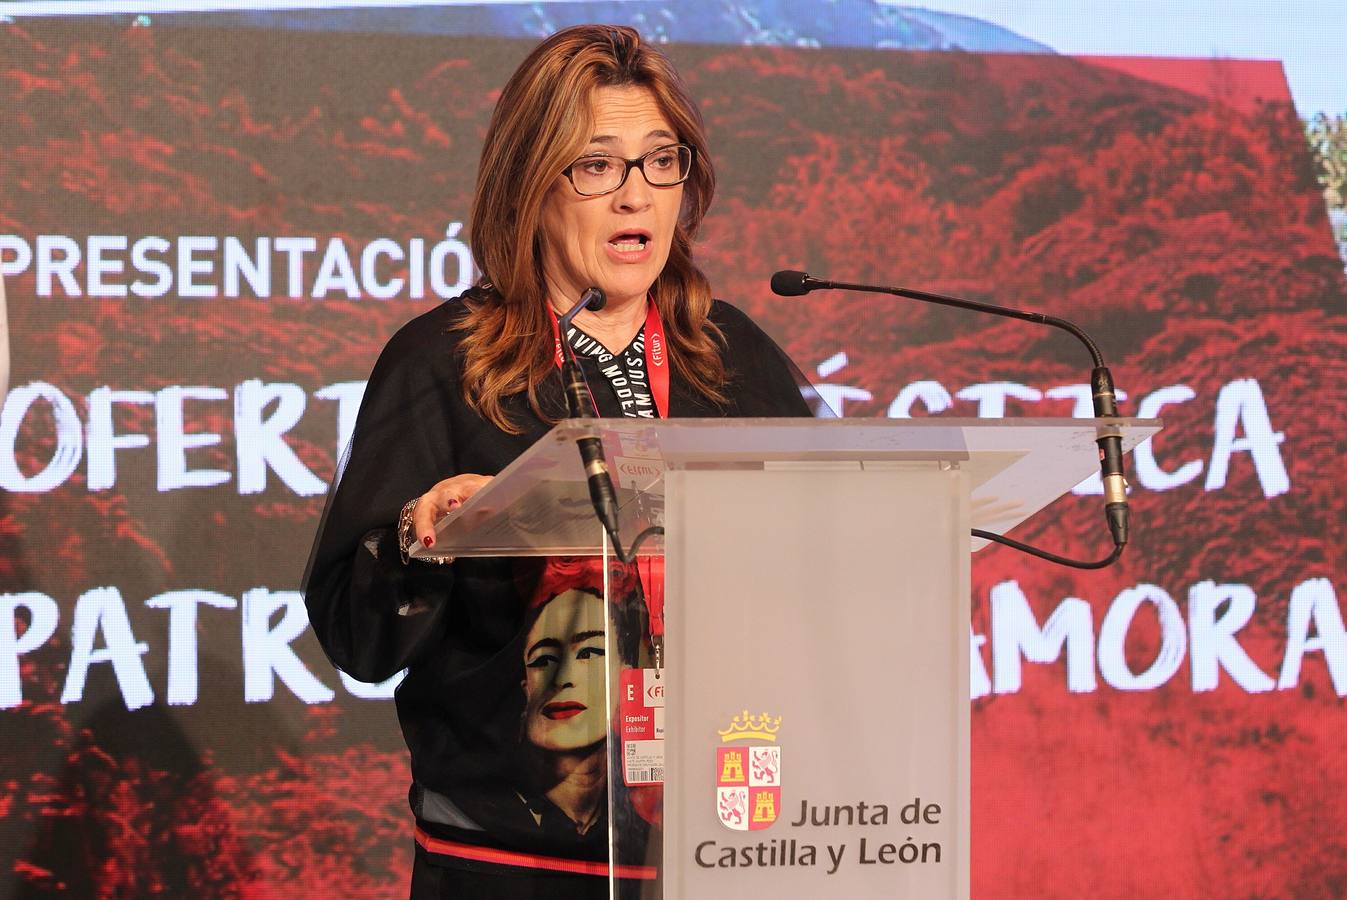 La presidenta de la Diputación de Zamora, Marte Martín Pozo, presenta la oferta turística de la provincia.